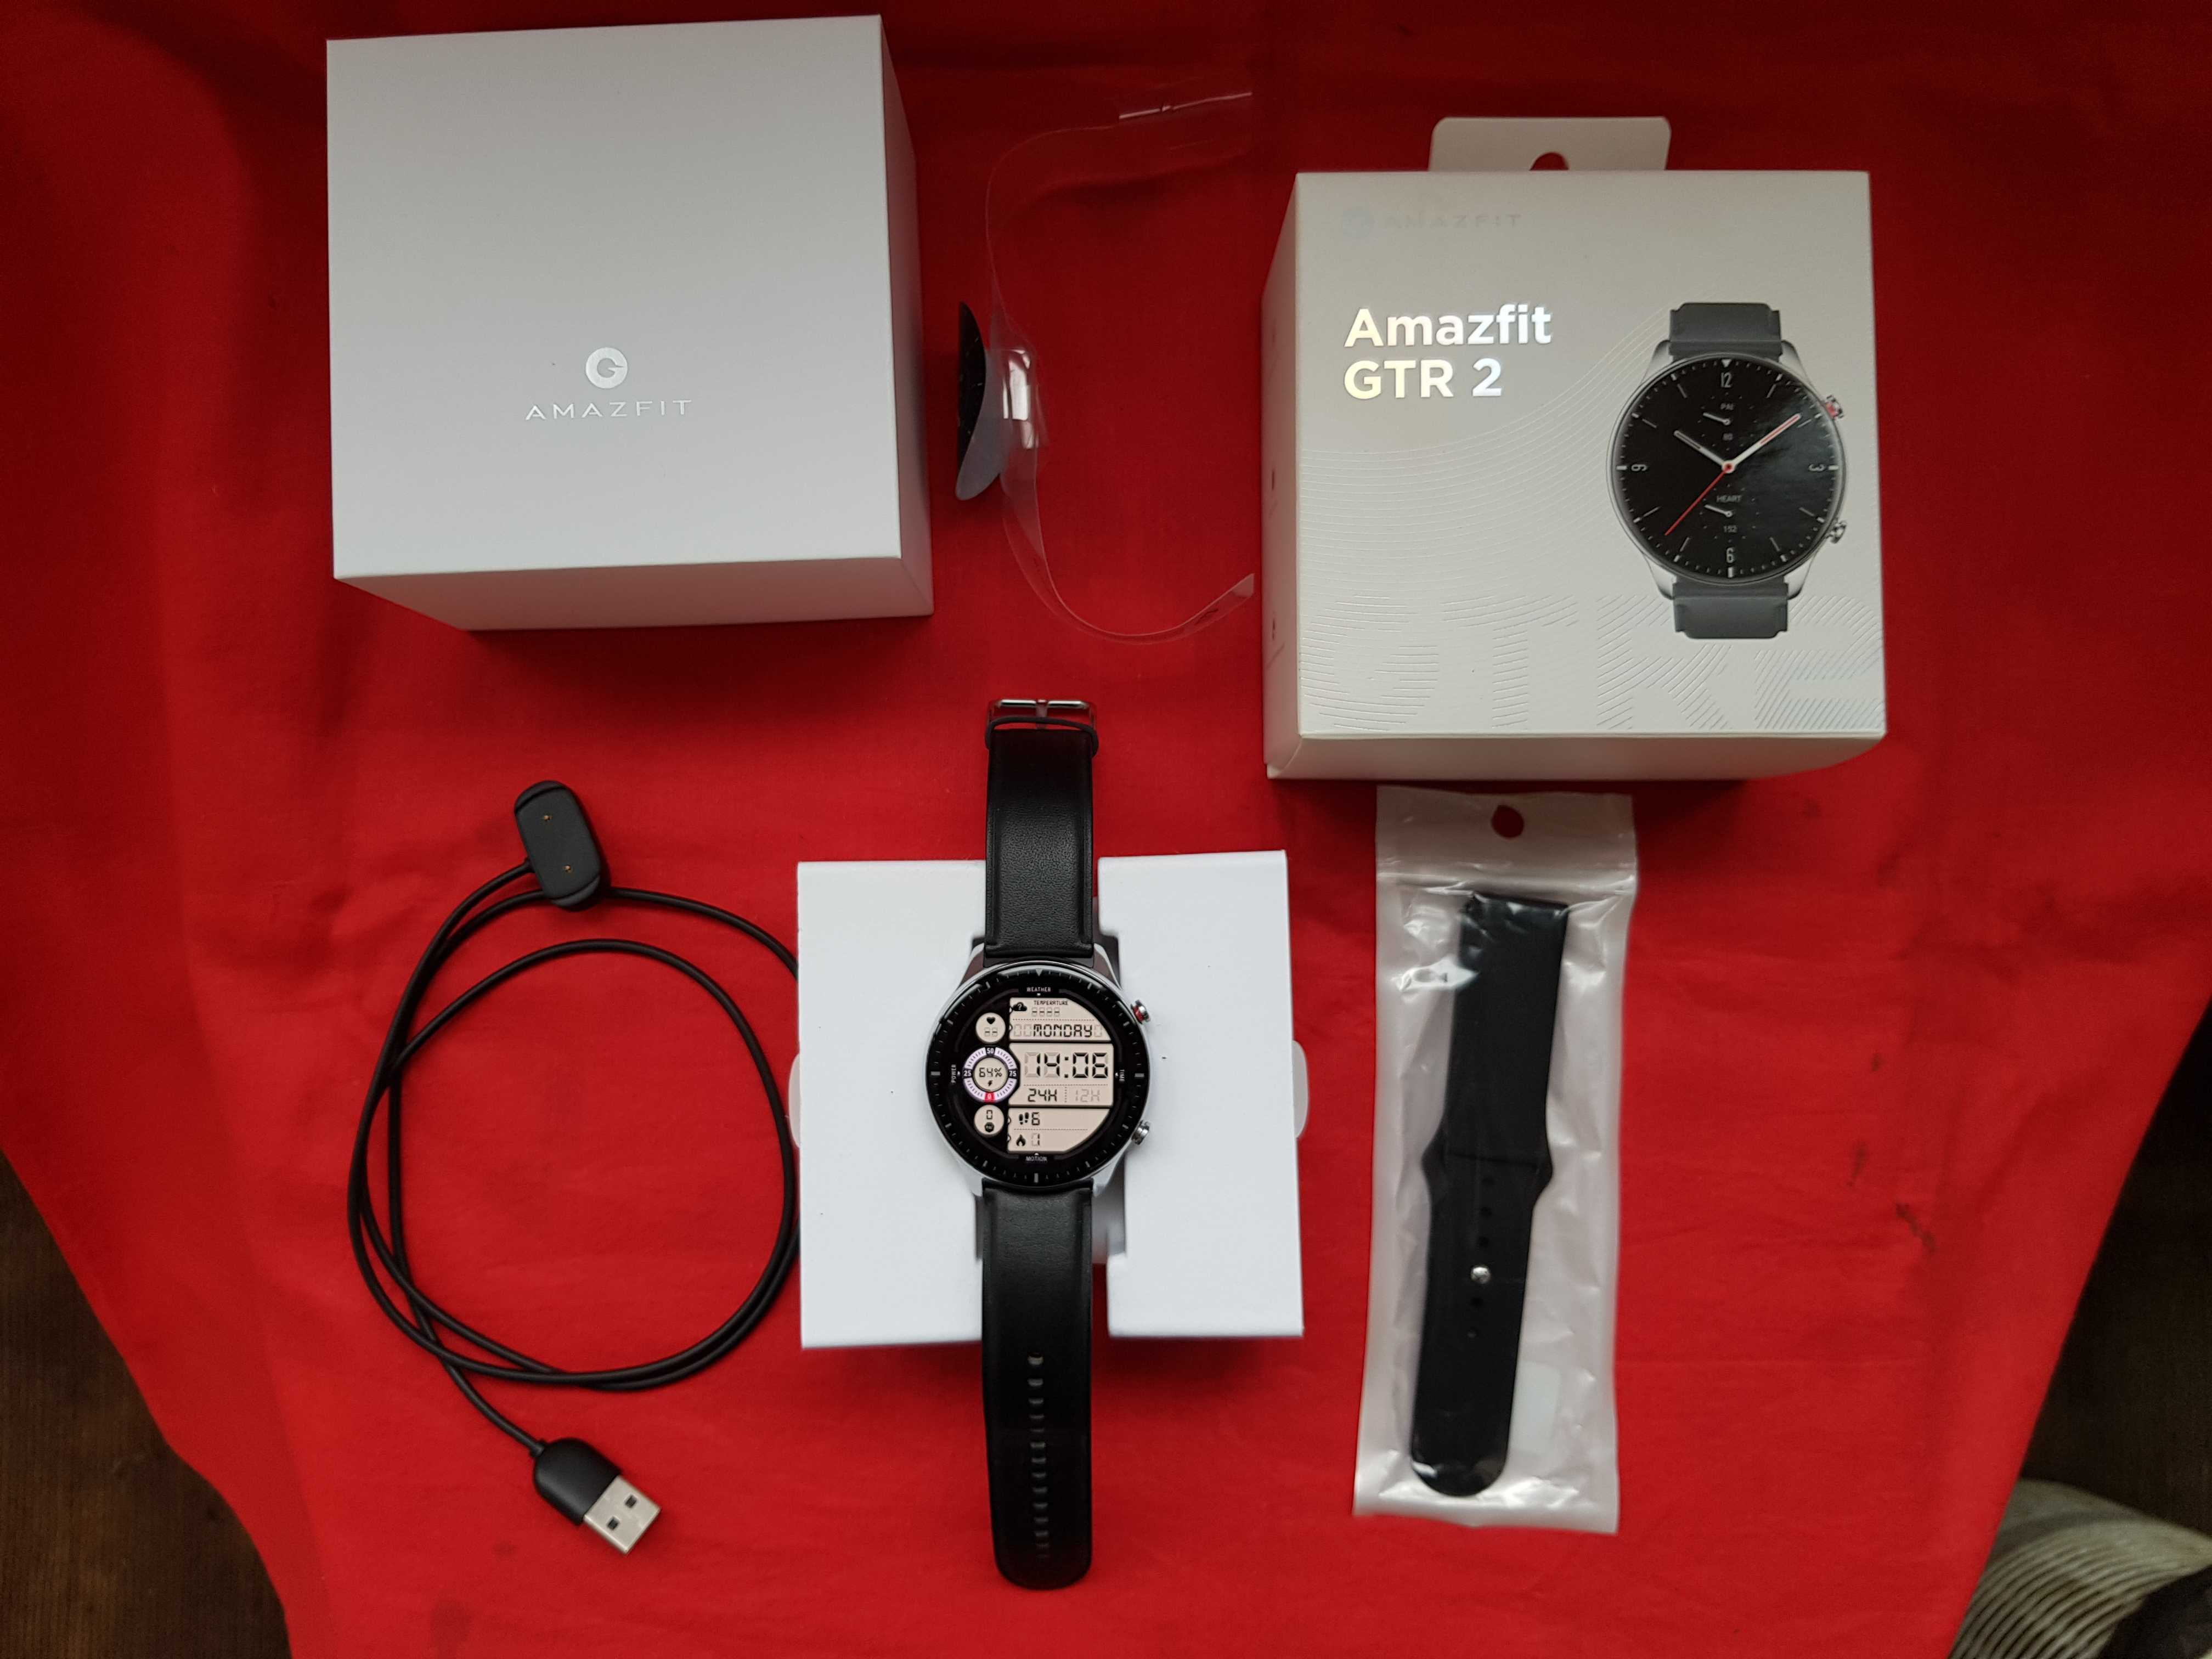 Amazfit GTR 2  
Смарт-часы Amazfit GTR 2